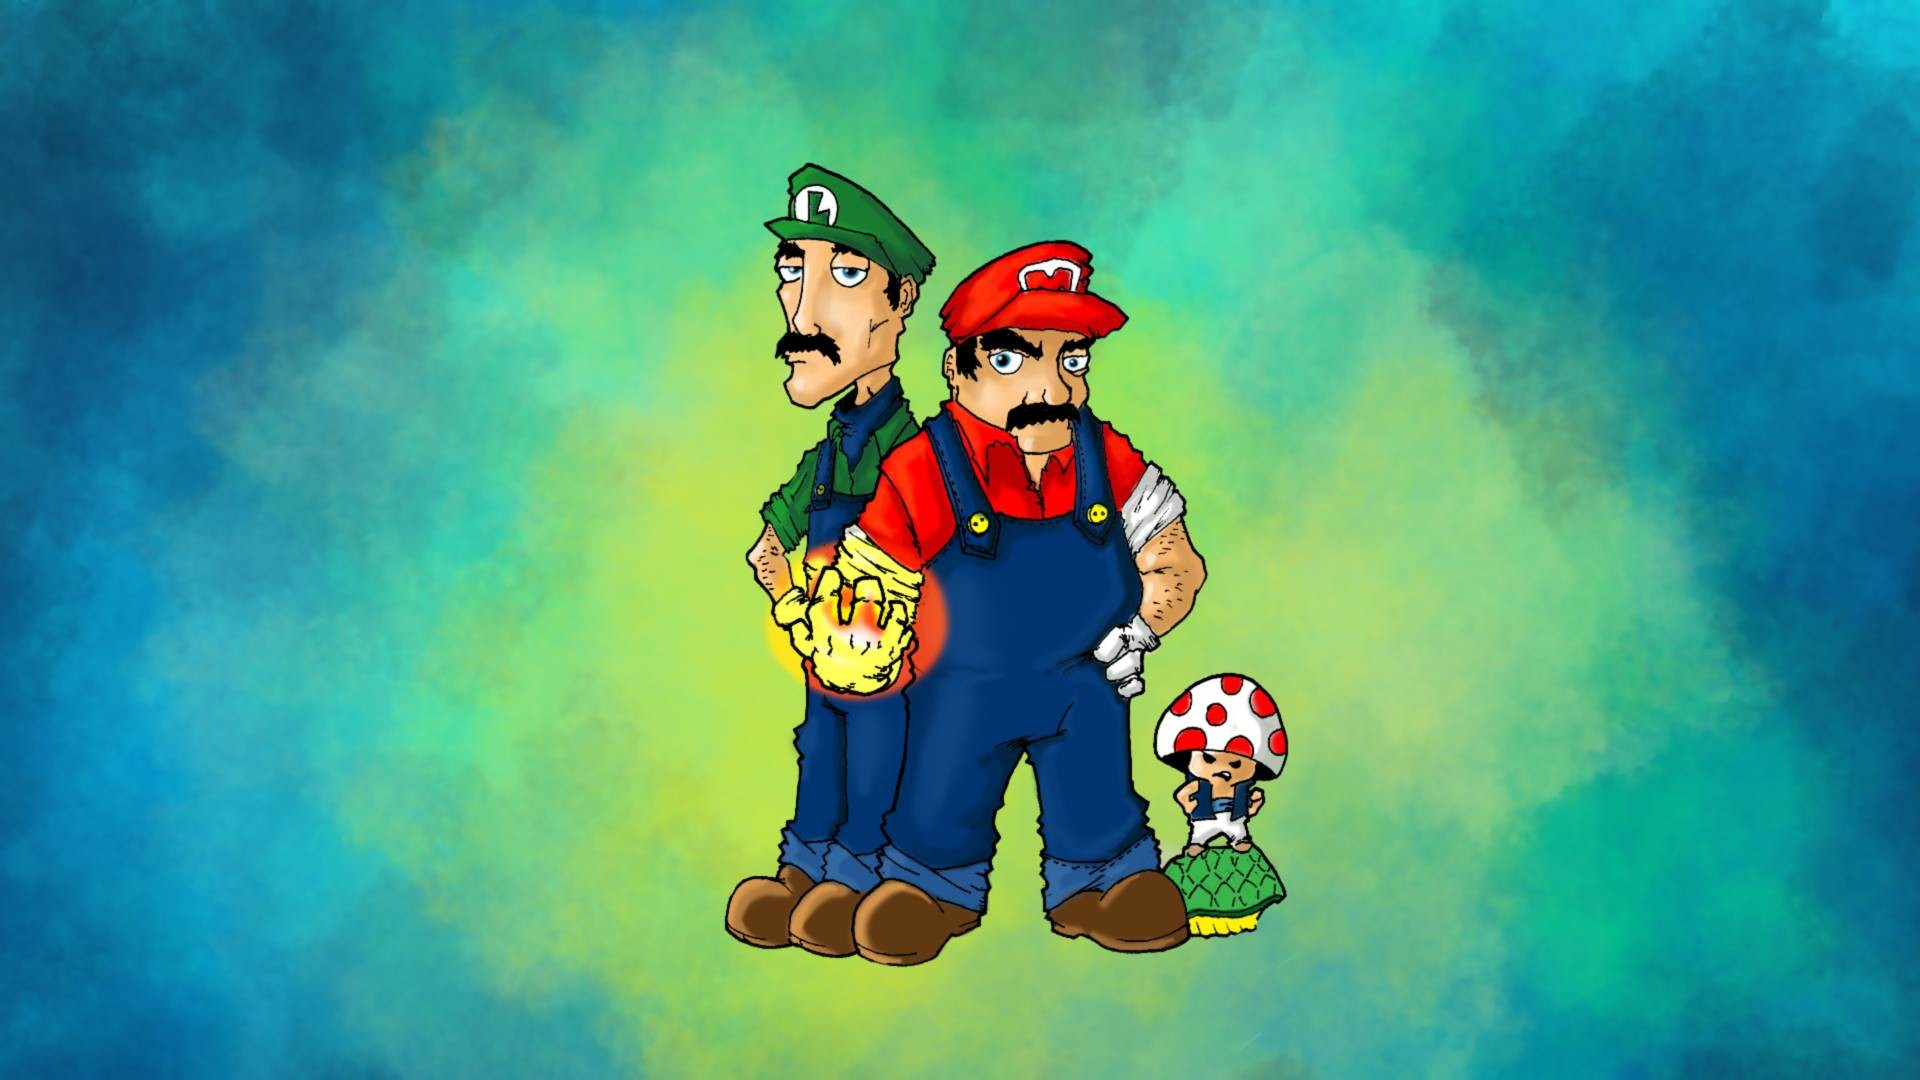 1920x1080 Luigi and Mario - Super Mario Wallpaper